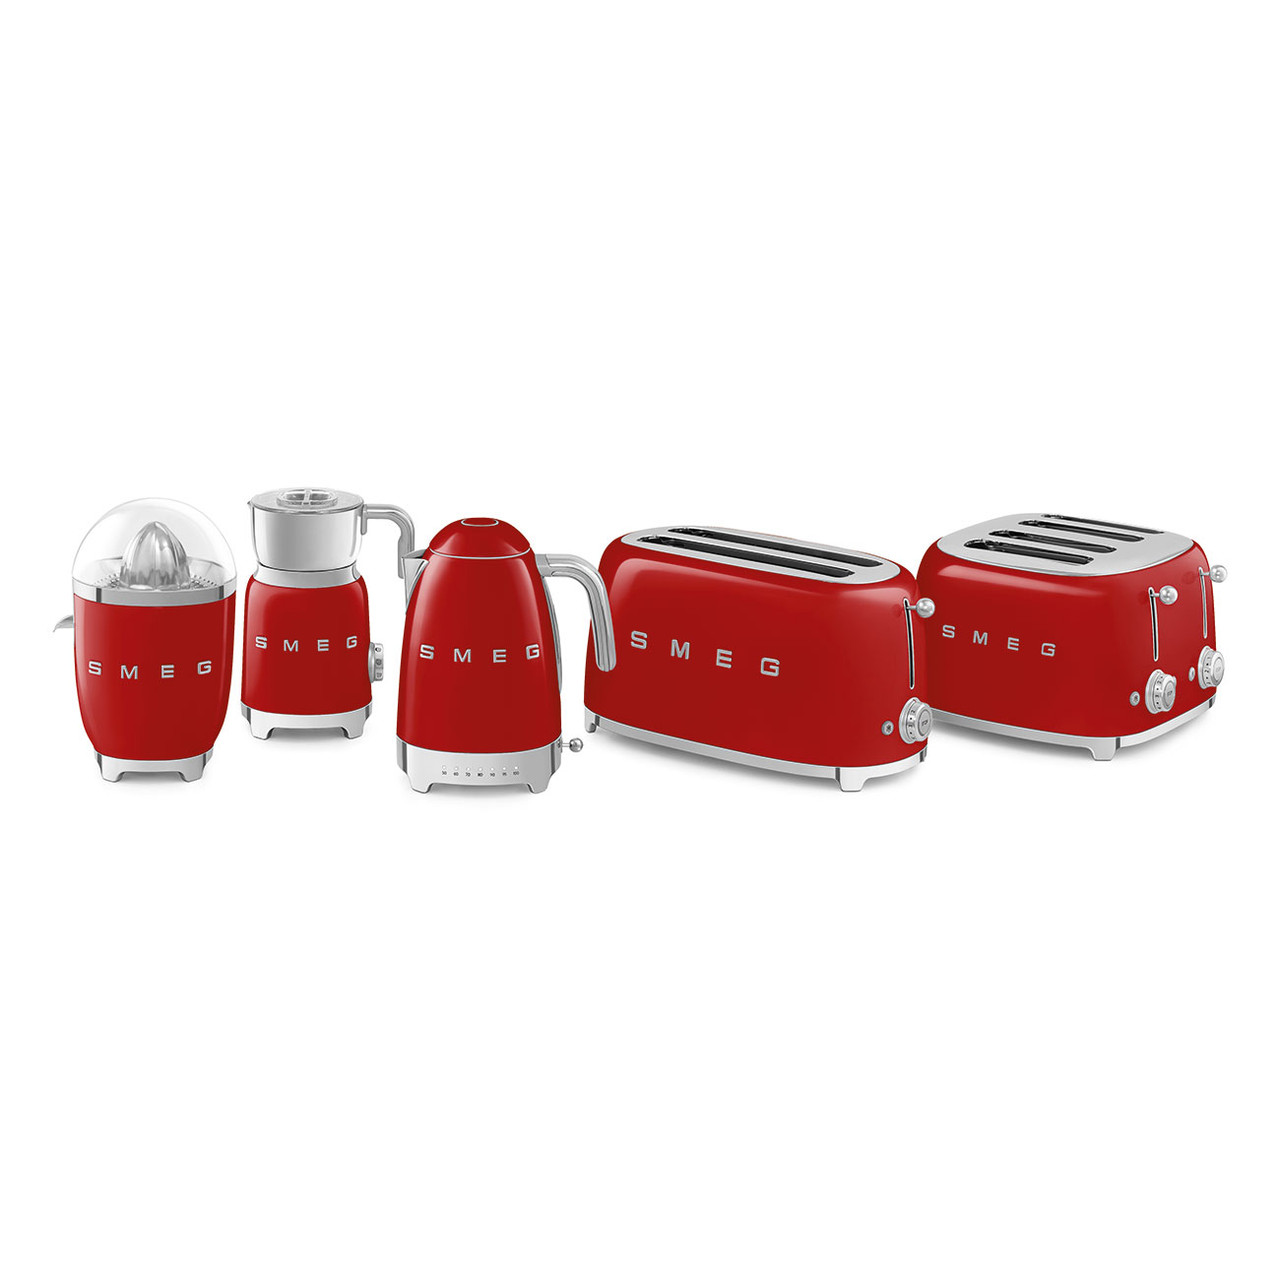 TSF03RDAU - 4 Slot Toaster, 50'S Retro Style Aesthetic, RED